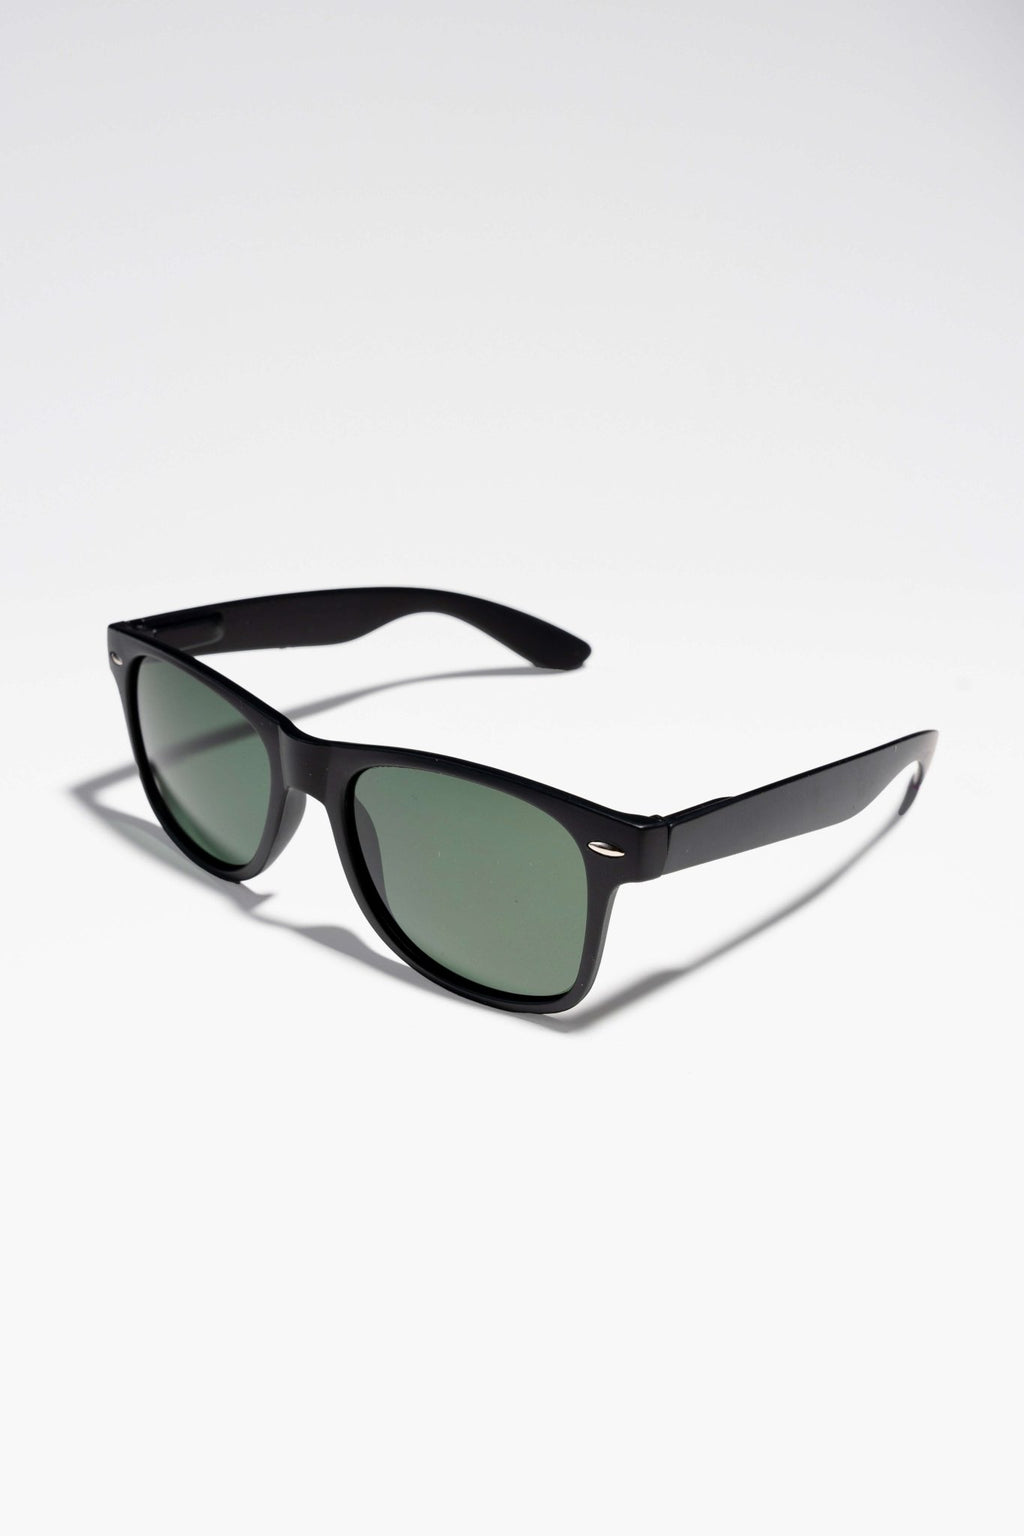 Raven Sunglasses - Black/Green